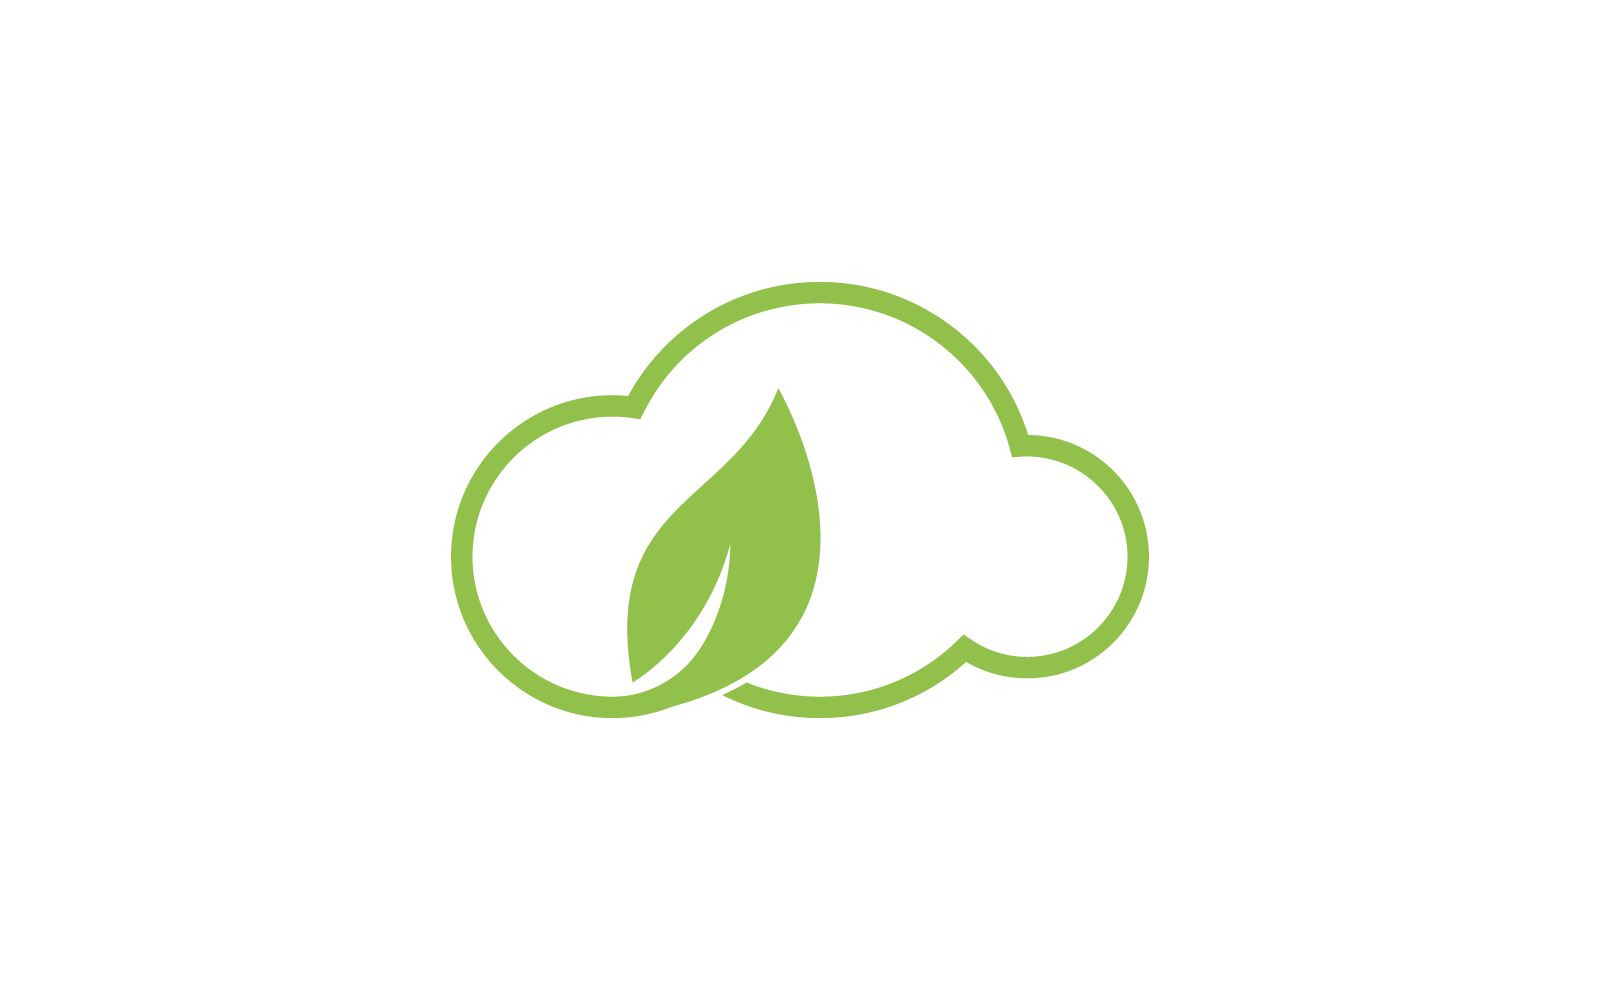 Eco cloud illustration logo design